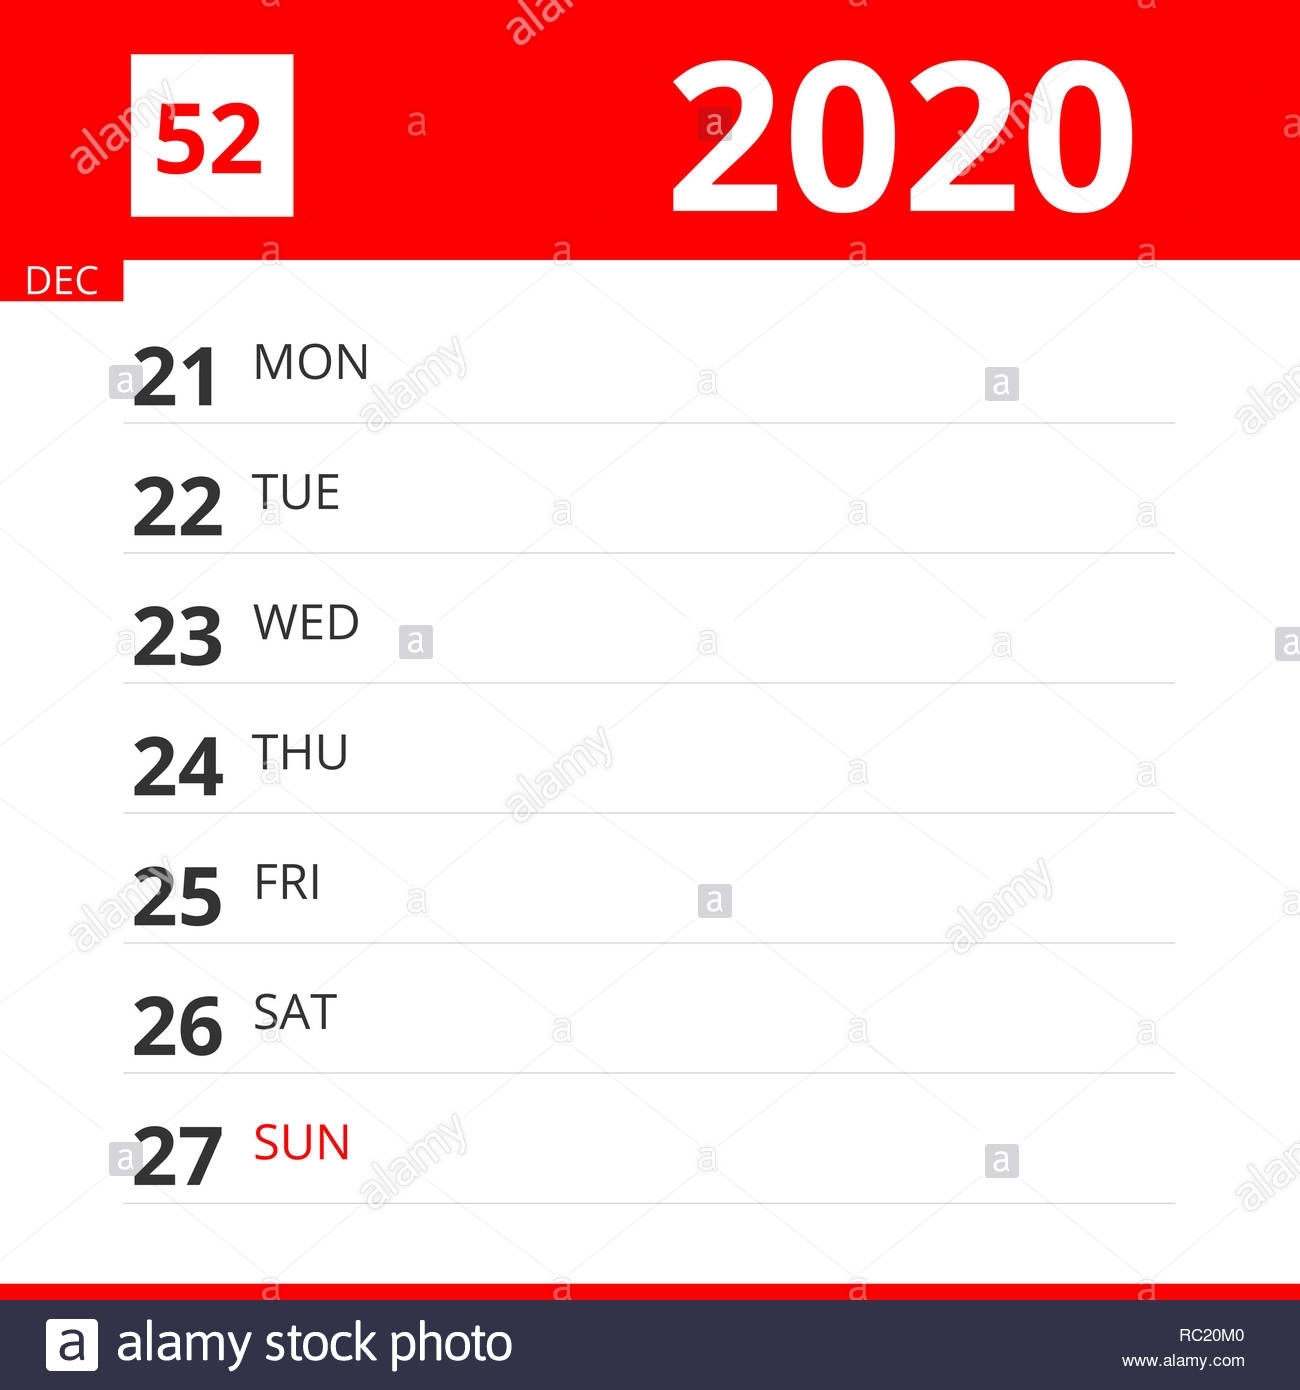 Calendar Planner For Week 52 In 2020, Ends December 27, 2020